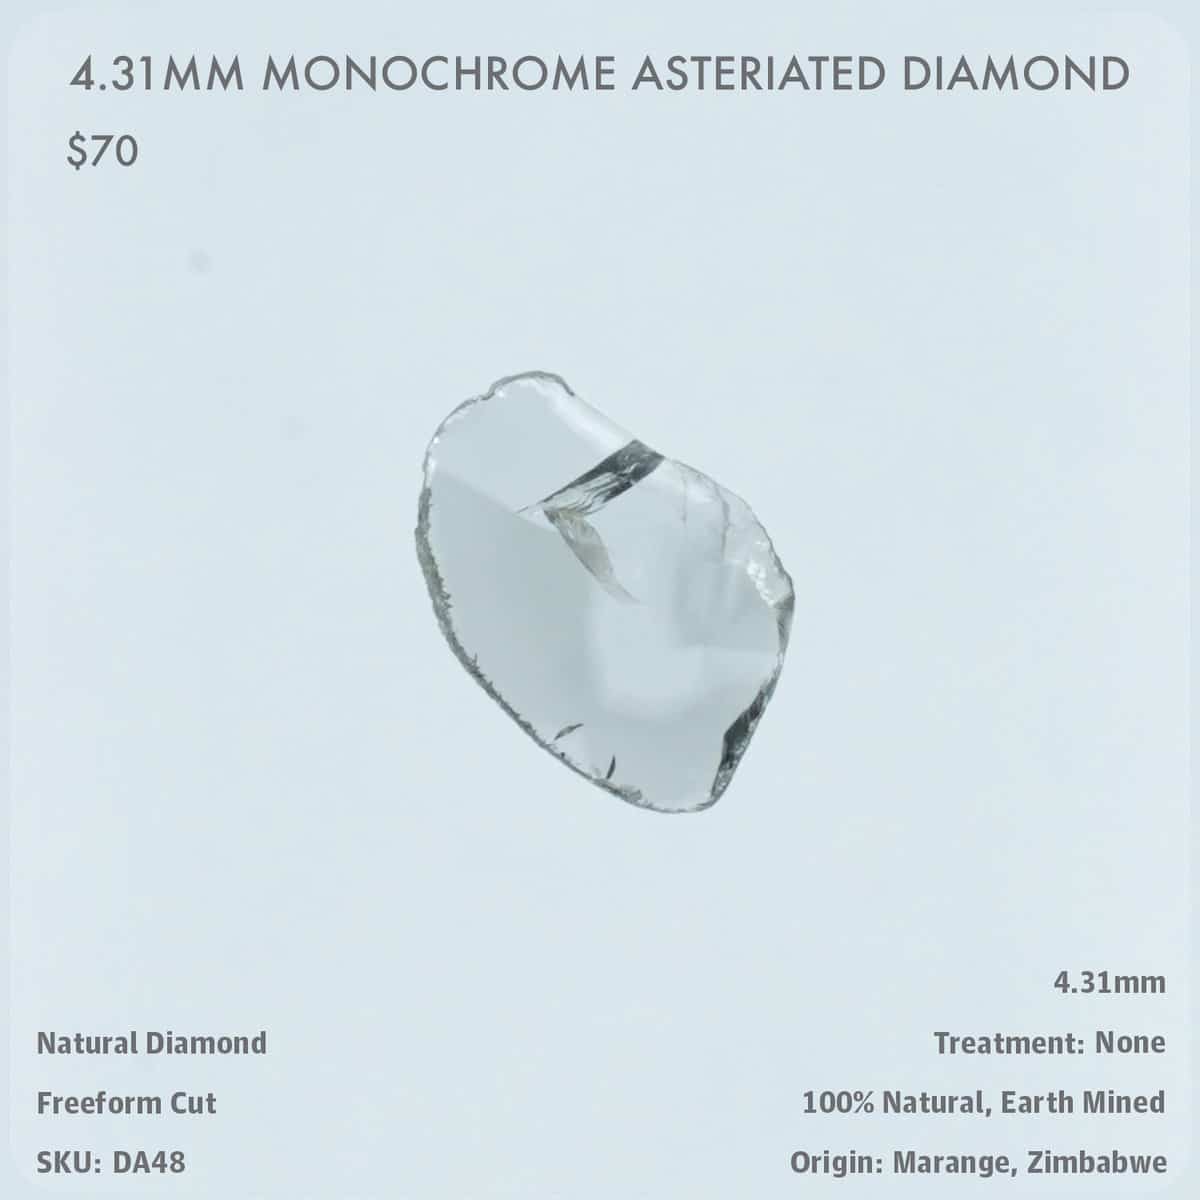 4.31mm Monochrome Asteriated Diamond